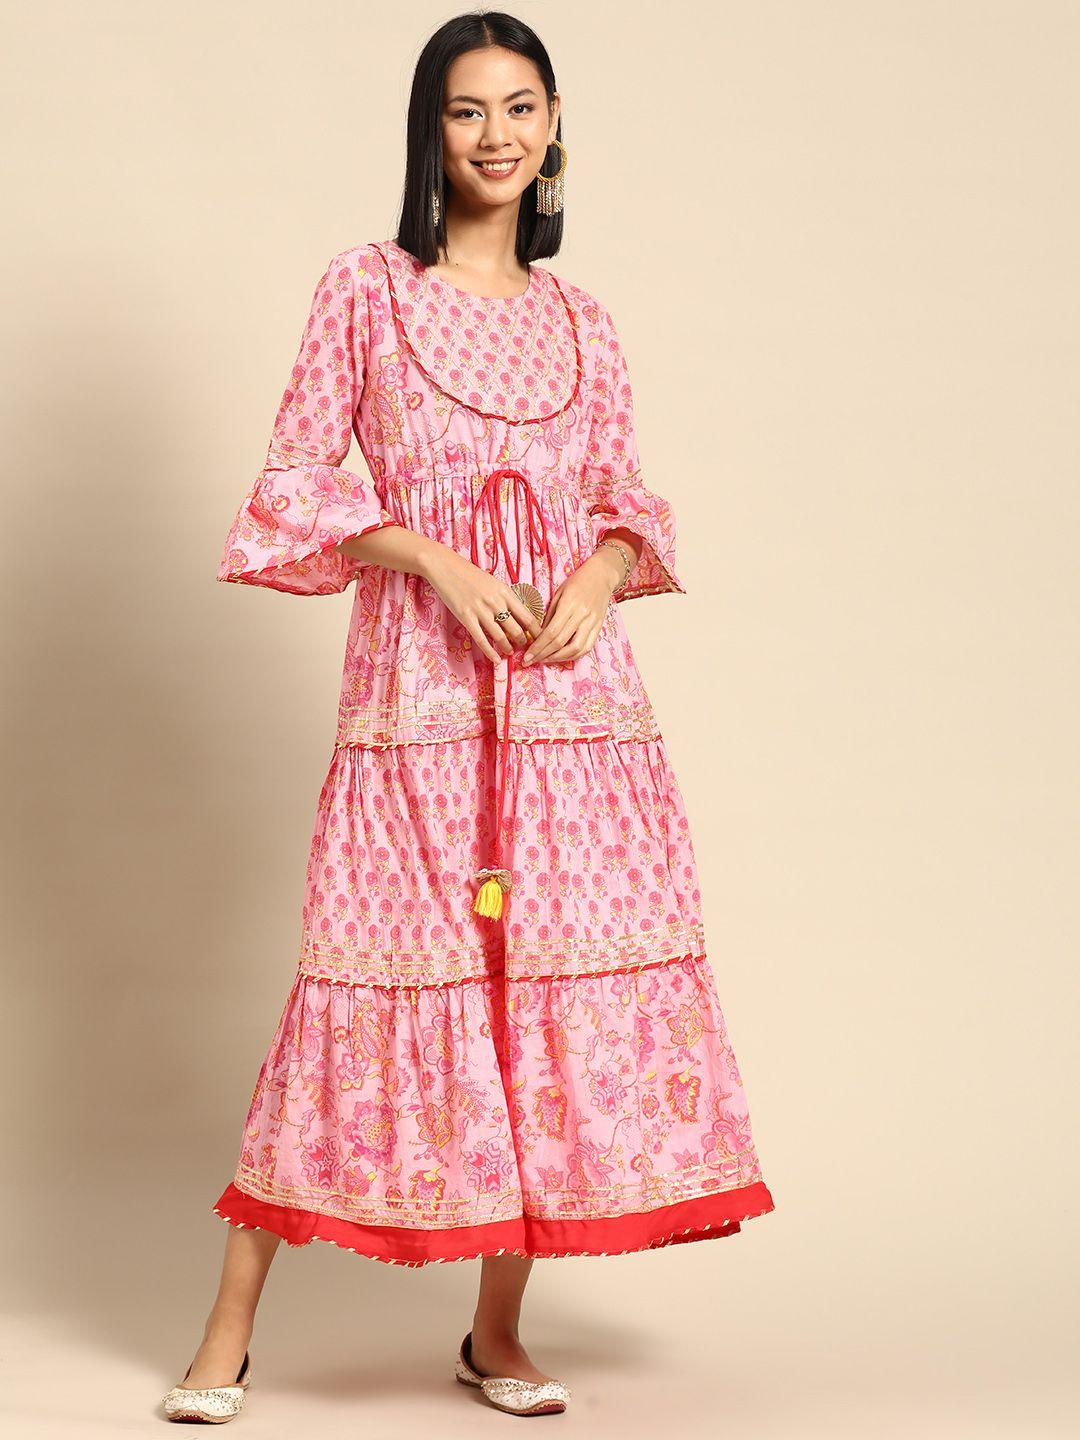 rangmayee pink floral ethnic a-line cotton midi dress